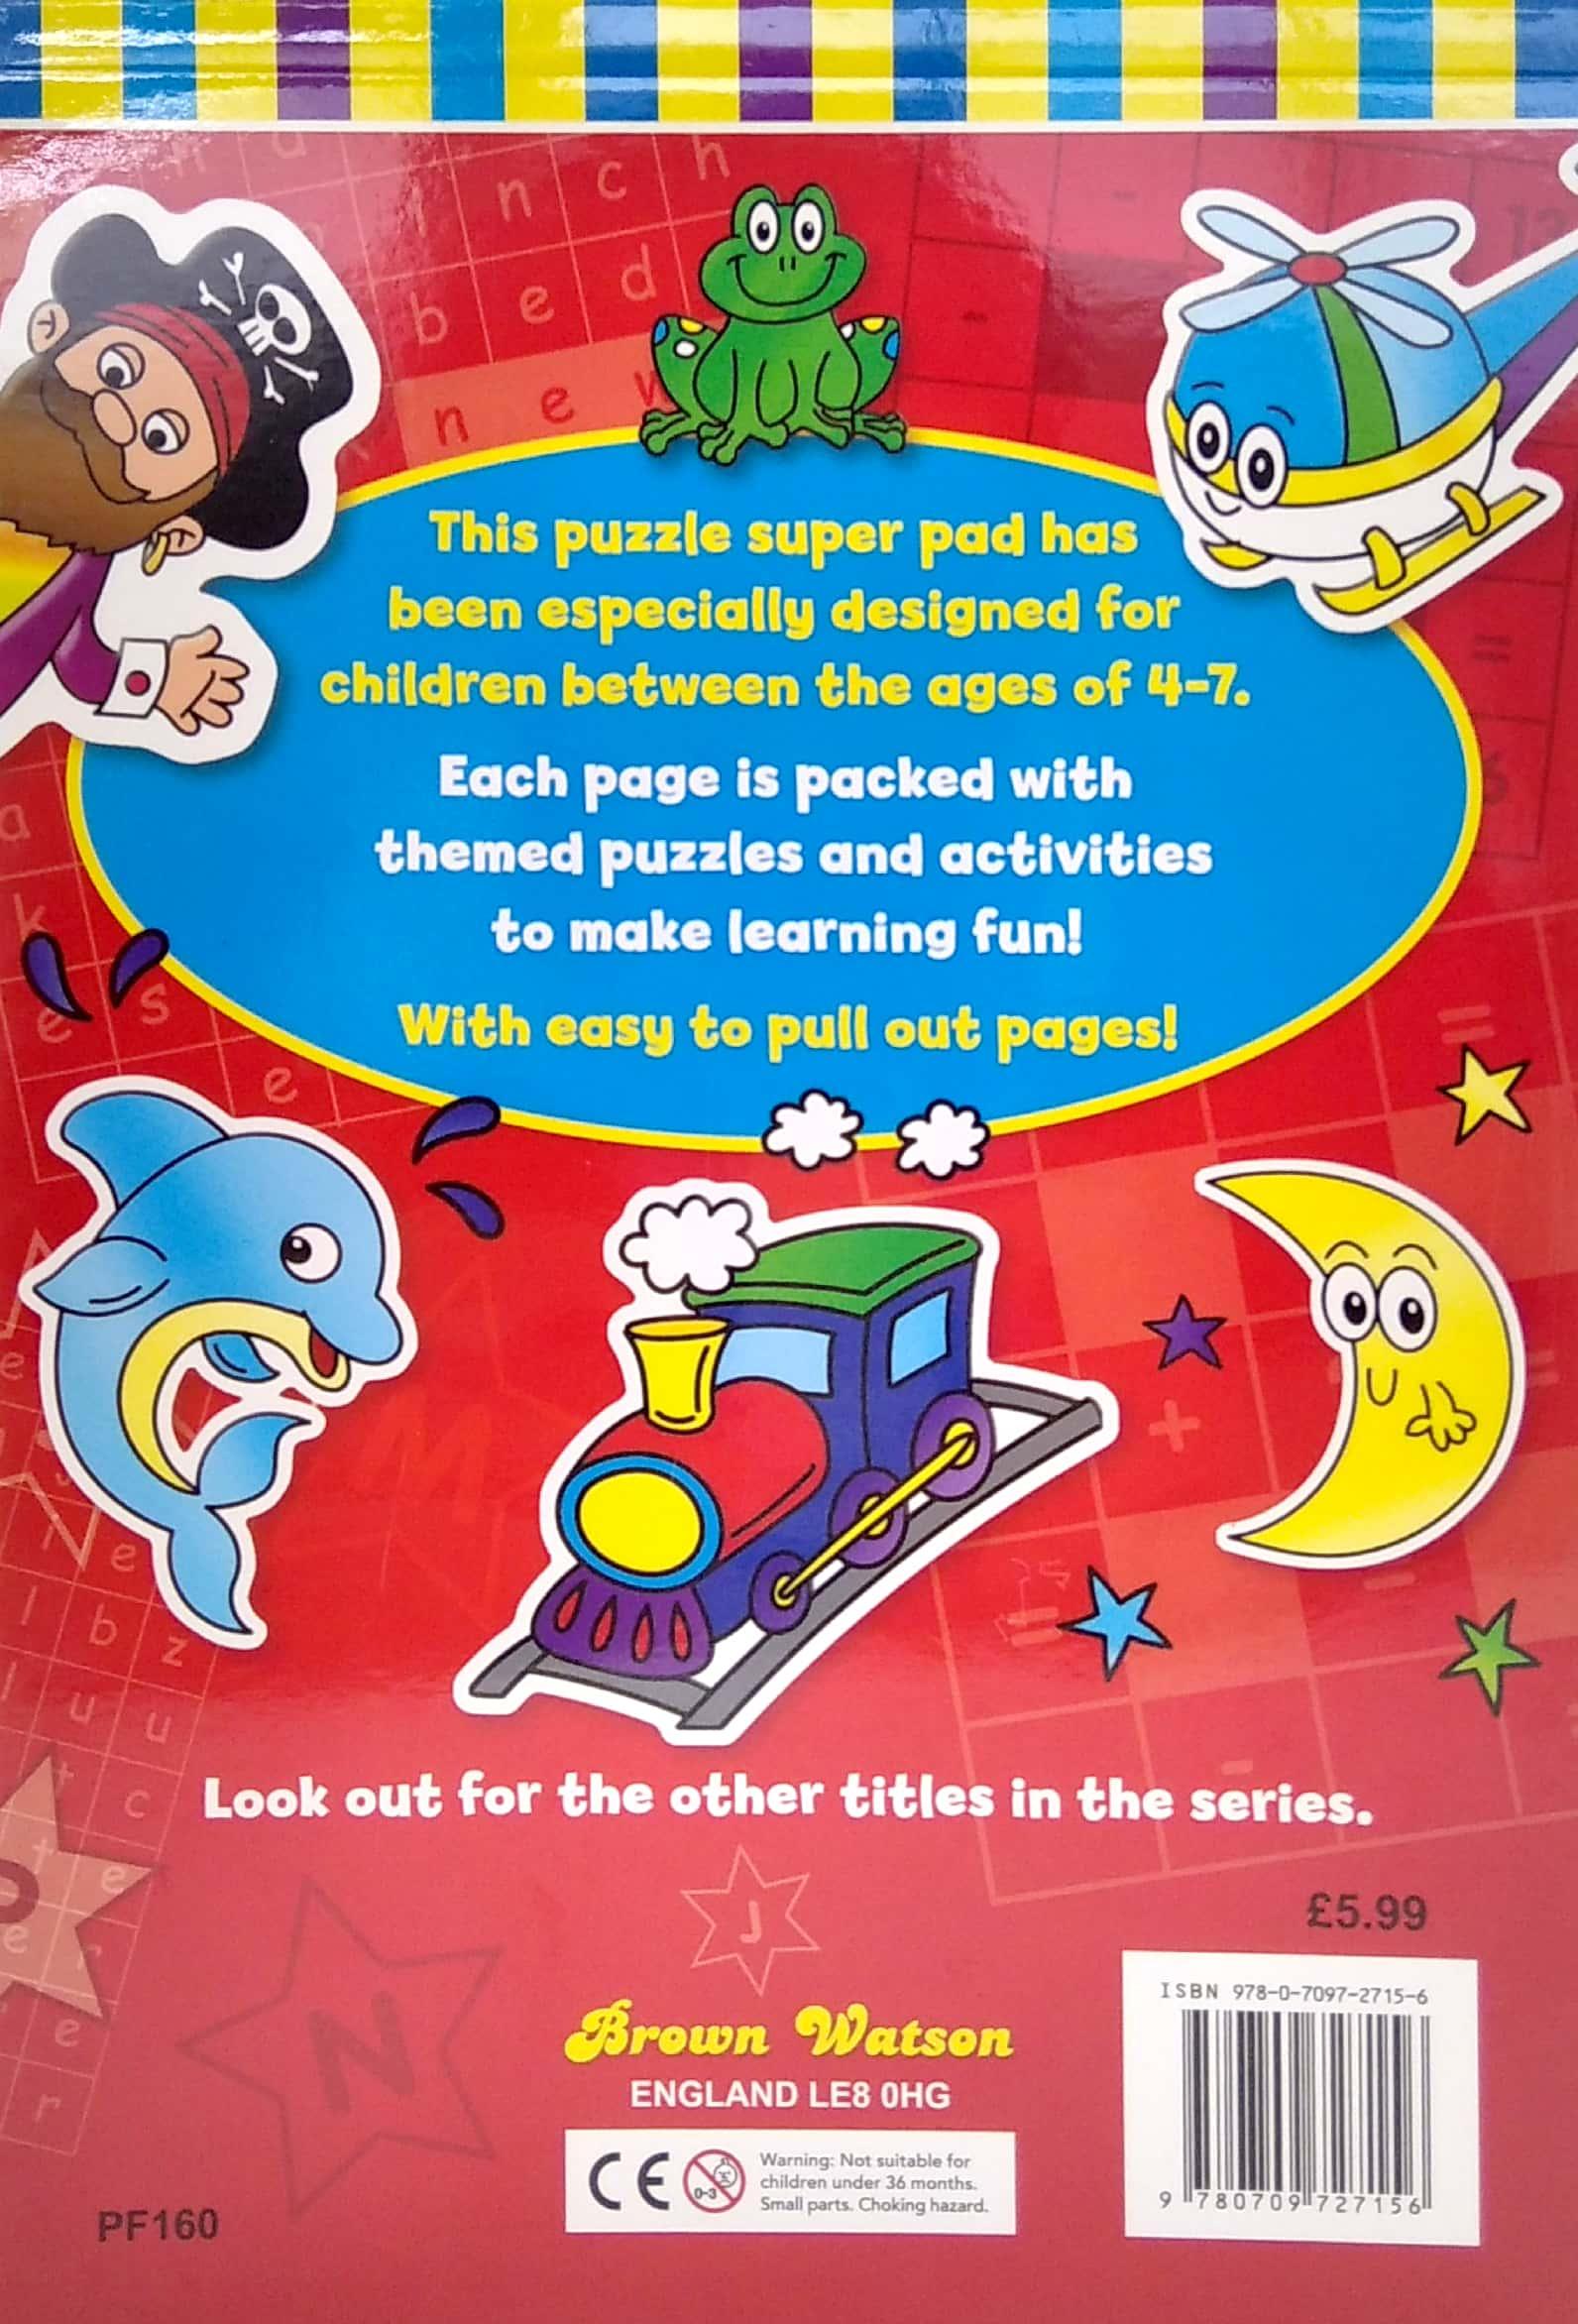 Puzzle Fun Super Pad: Age 4-7 Years